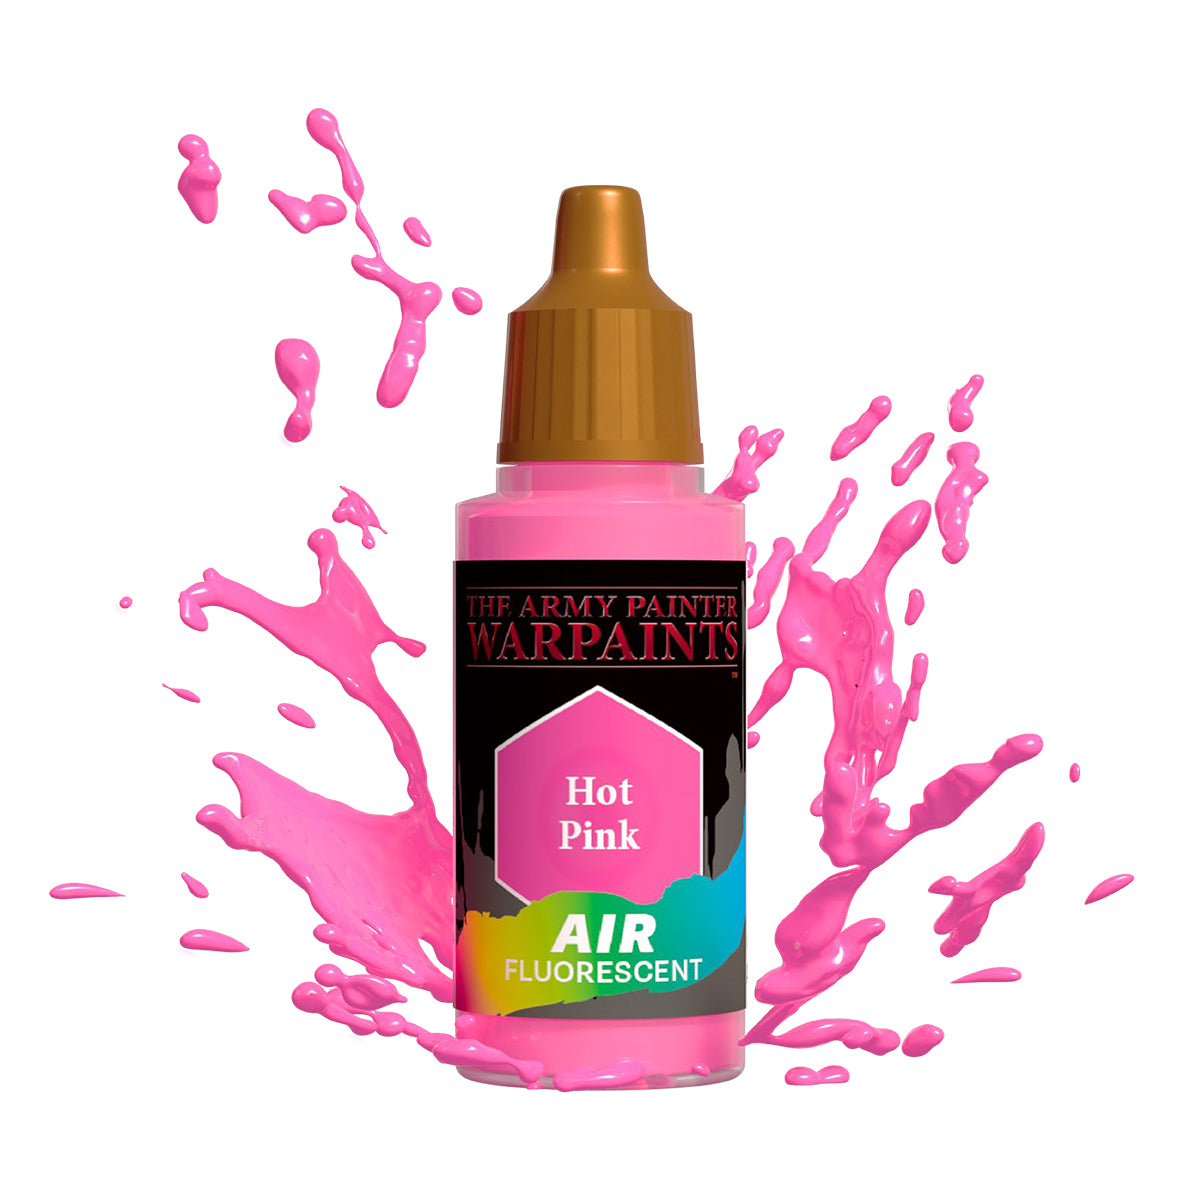 Warpaints Air Fluorescent: Hot Pink